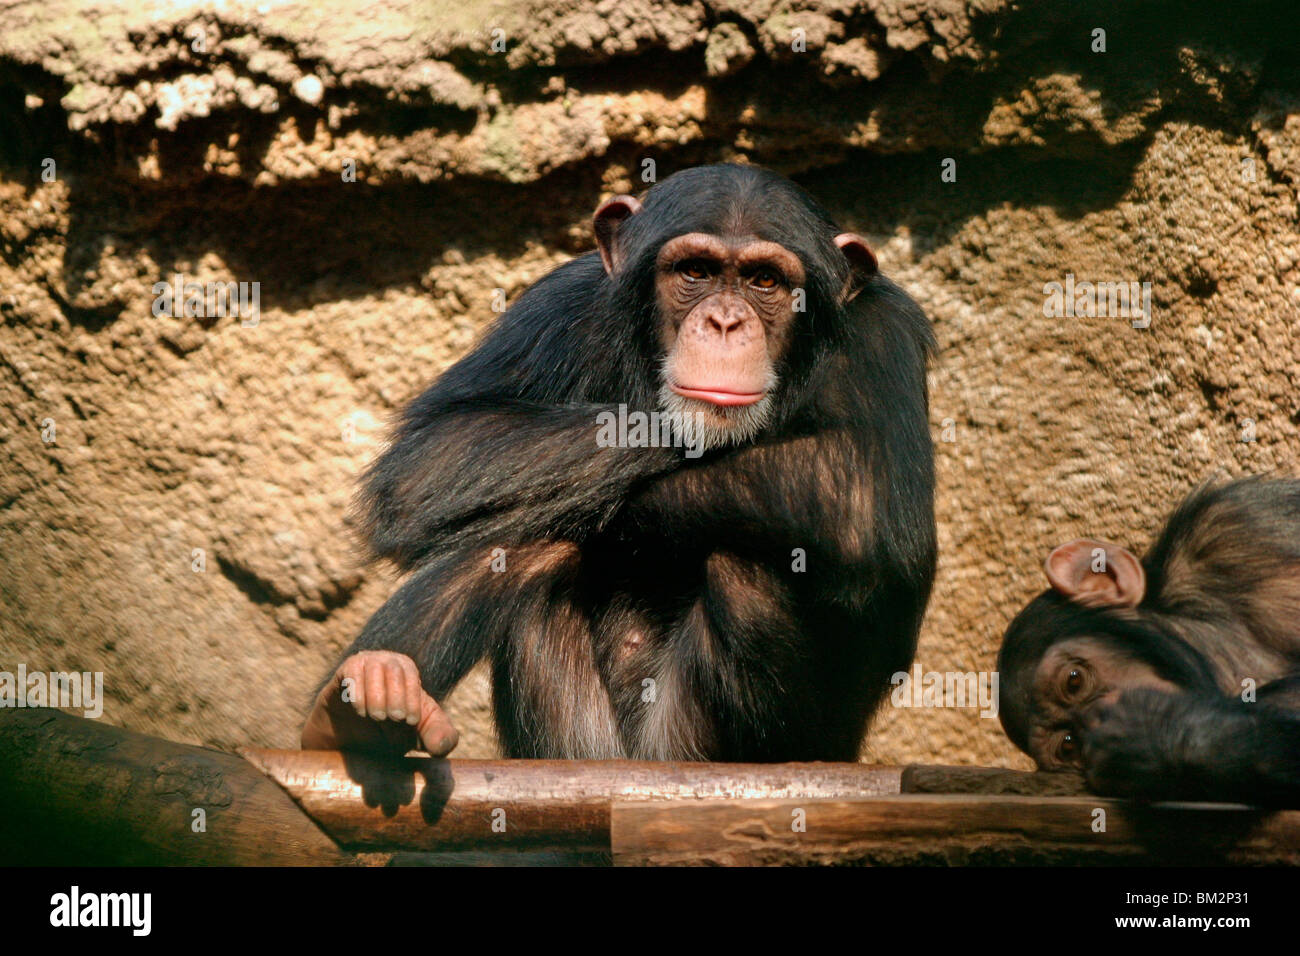 Zwei Schimpansen / two chimpanzees Stock Photo